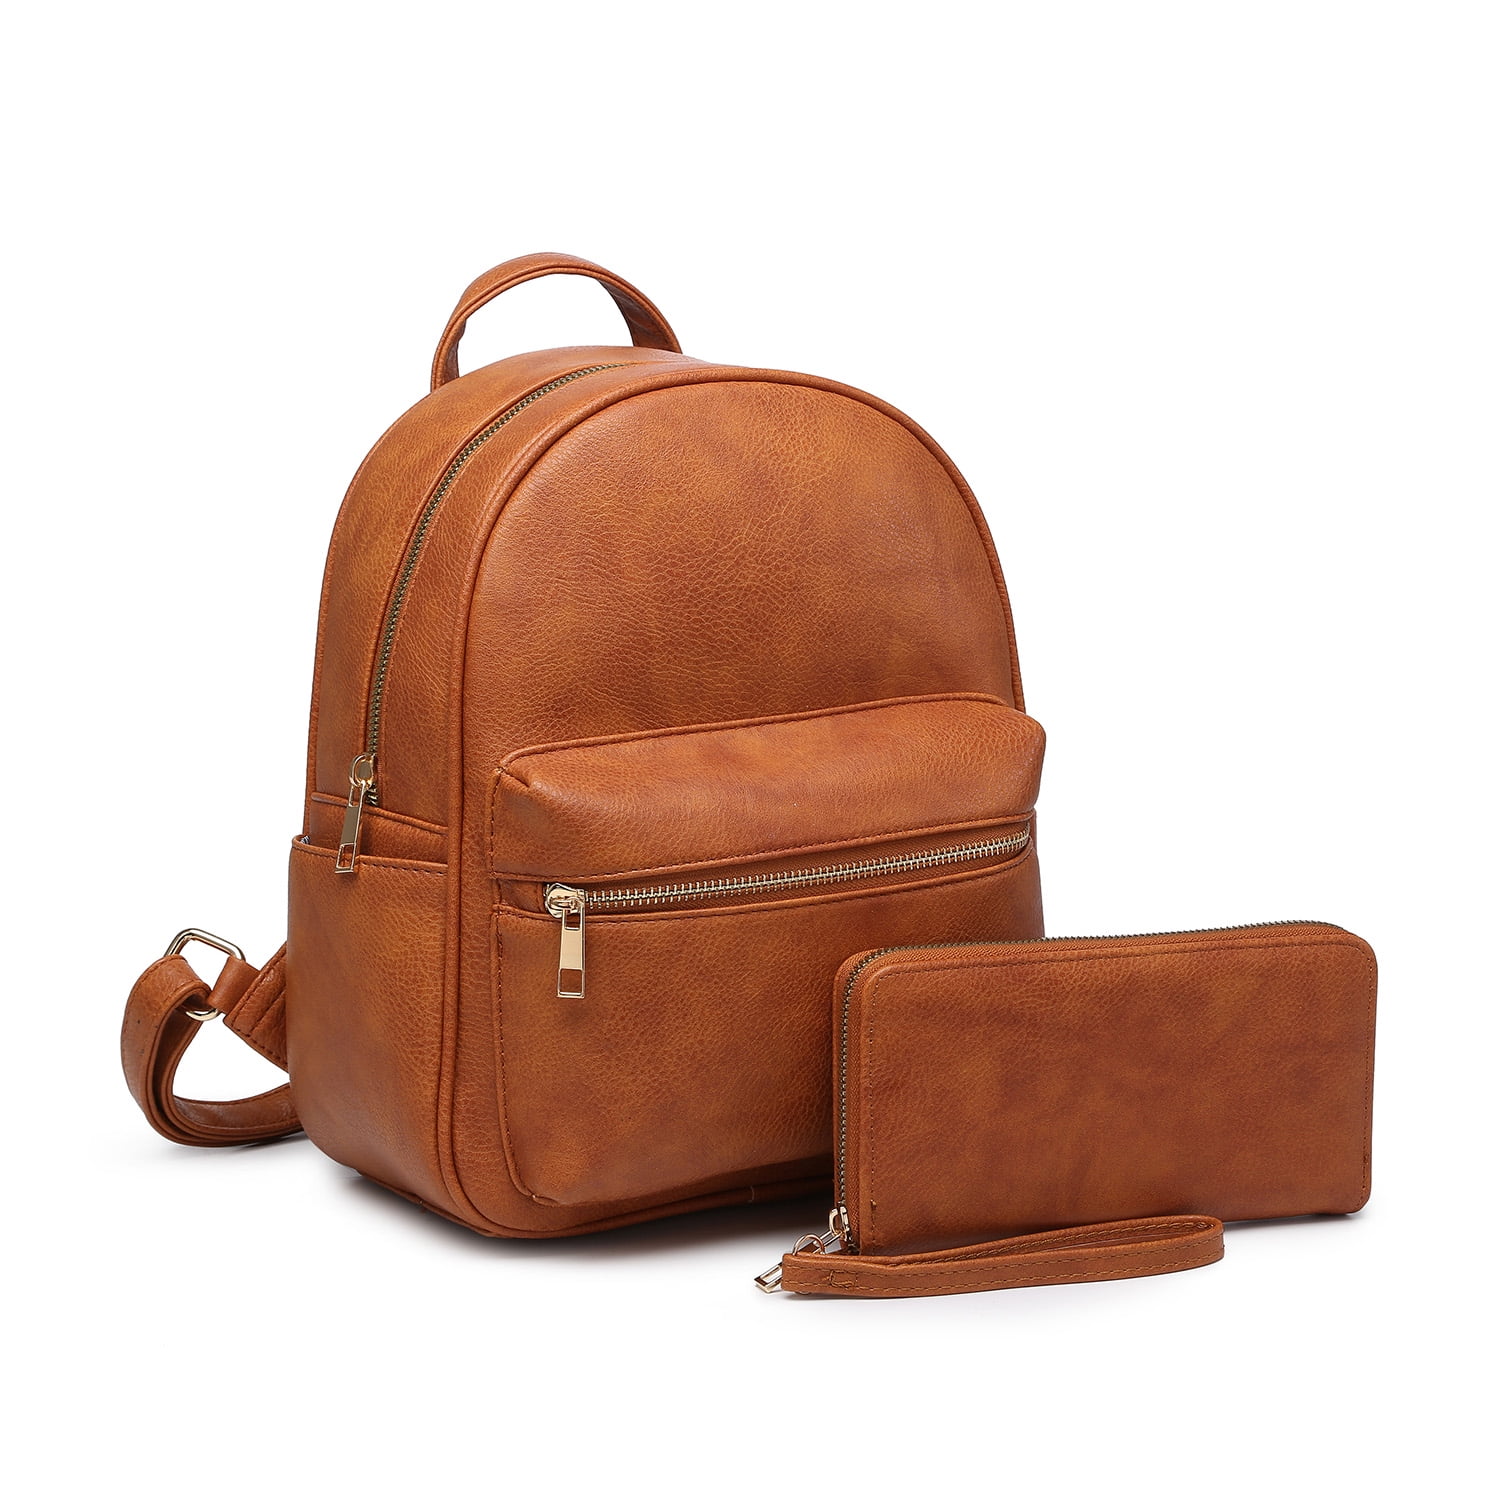 Rucksacks & Backpacks - Orange - women - 4 products | FASHIOLA INDIA